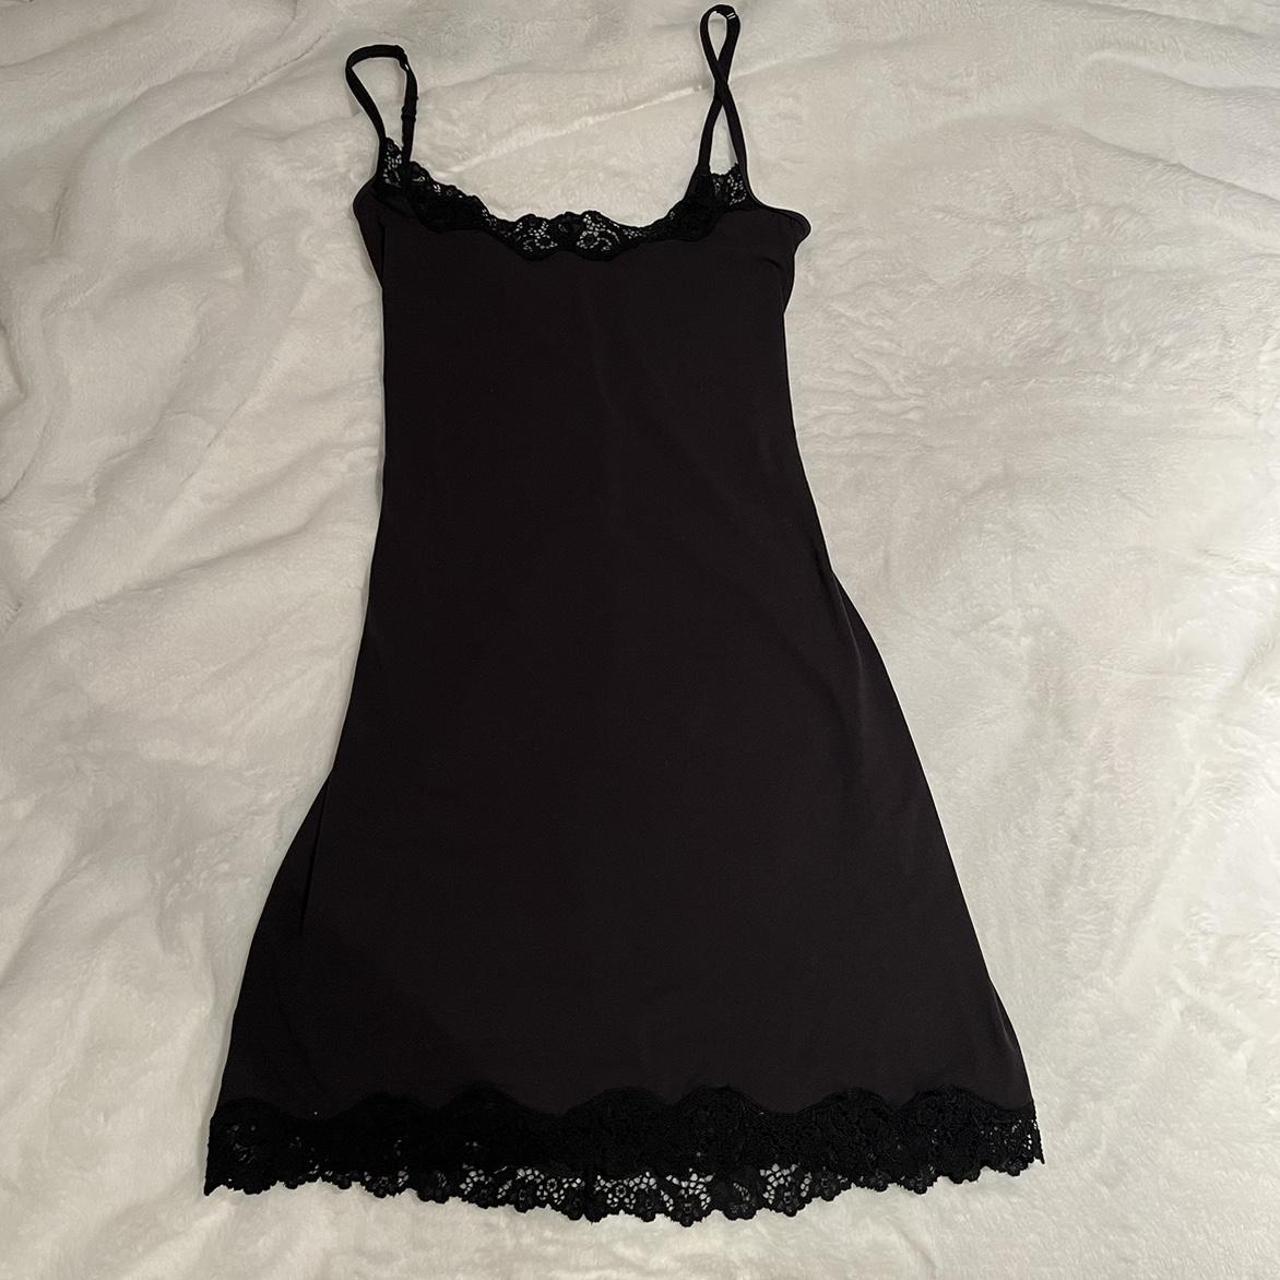 Skims Women's Black Dress | Depop